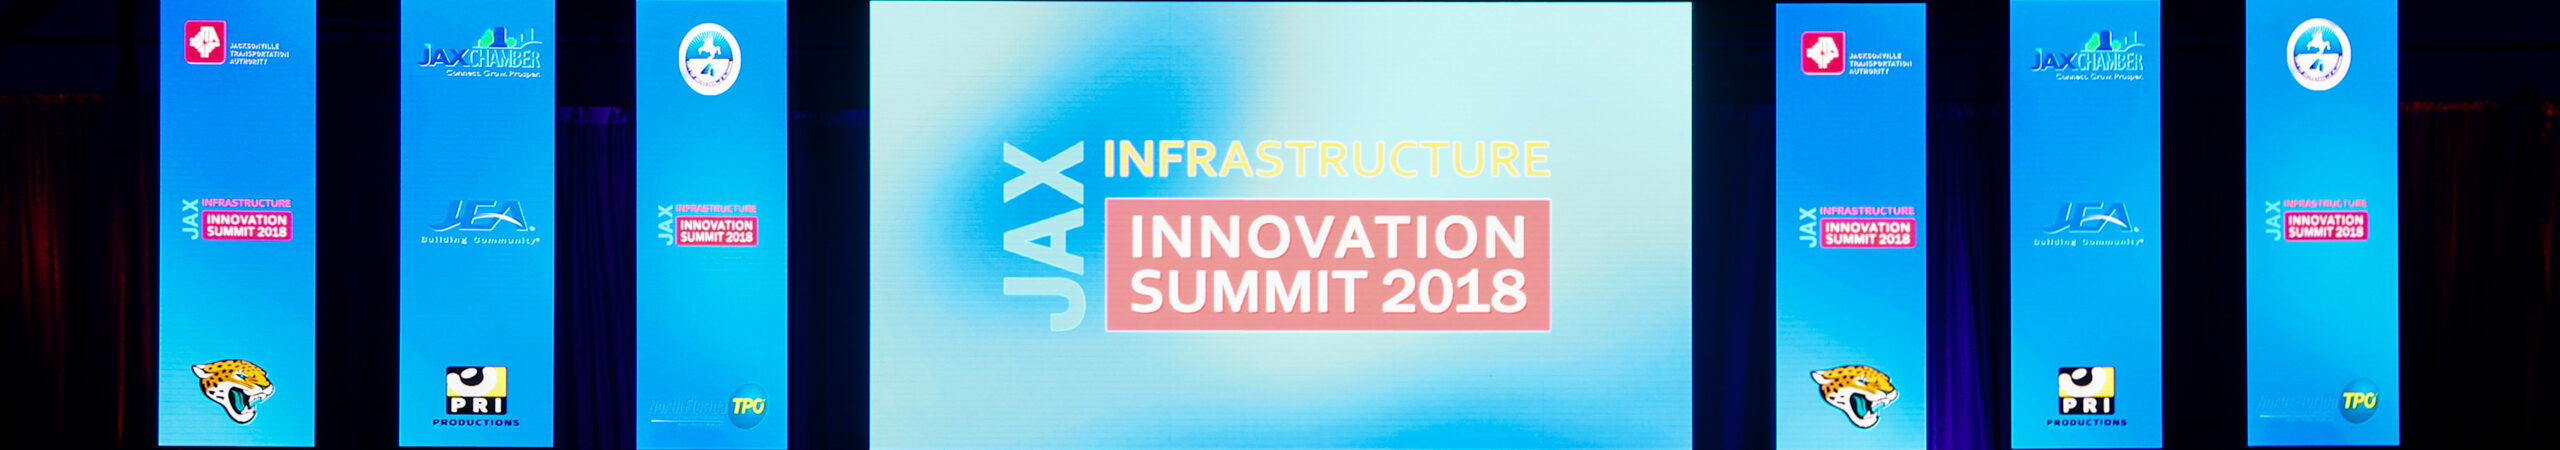 Jax Infrastructure Innovation Summit